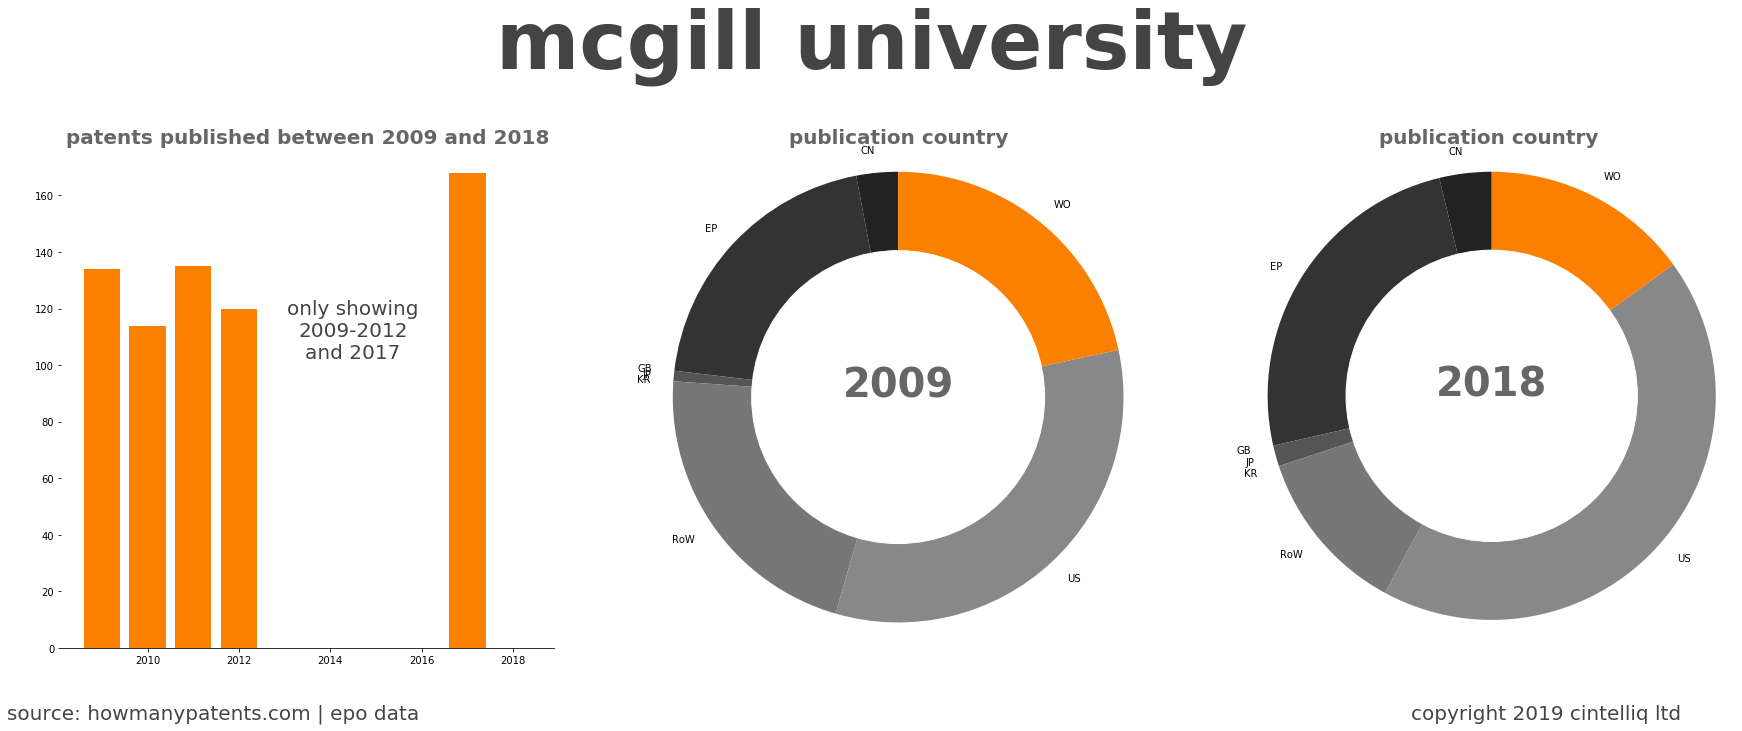 summary of patents for Mcgill University